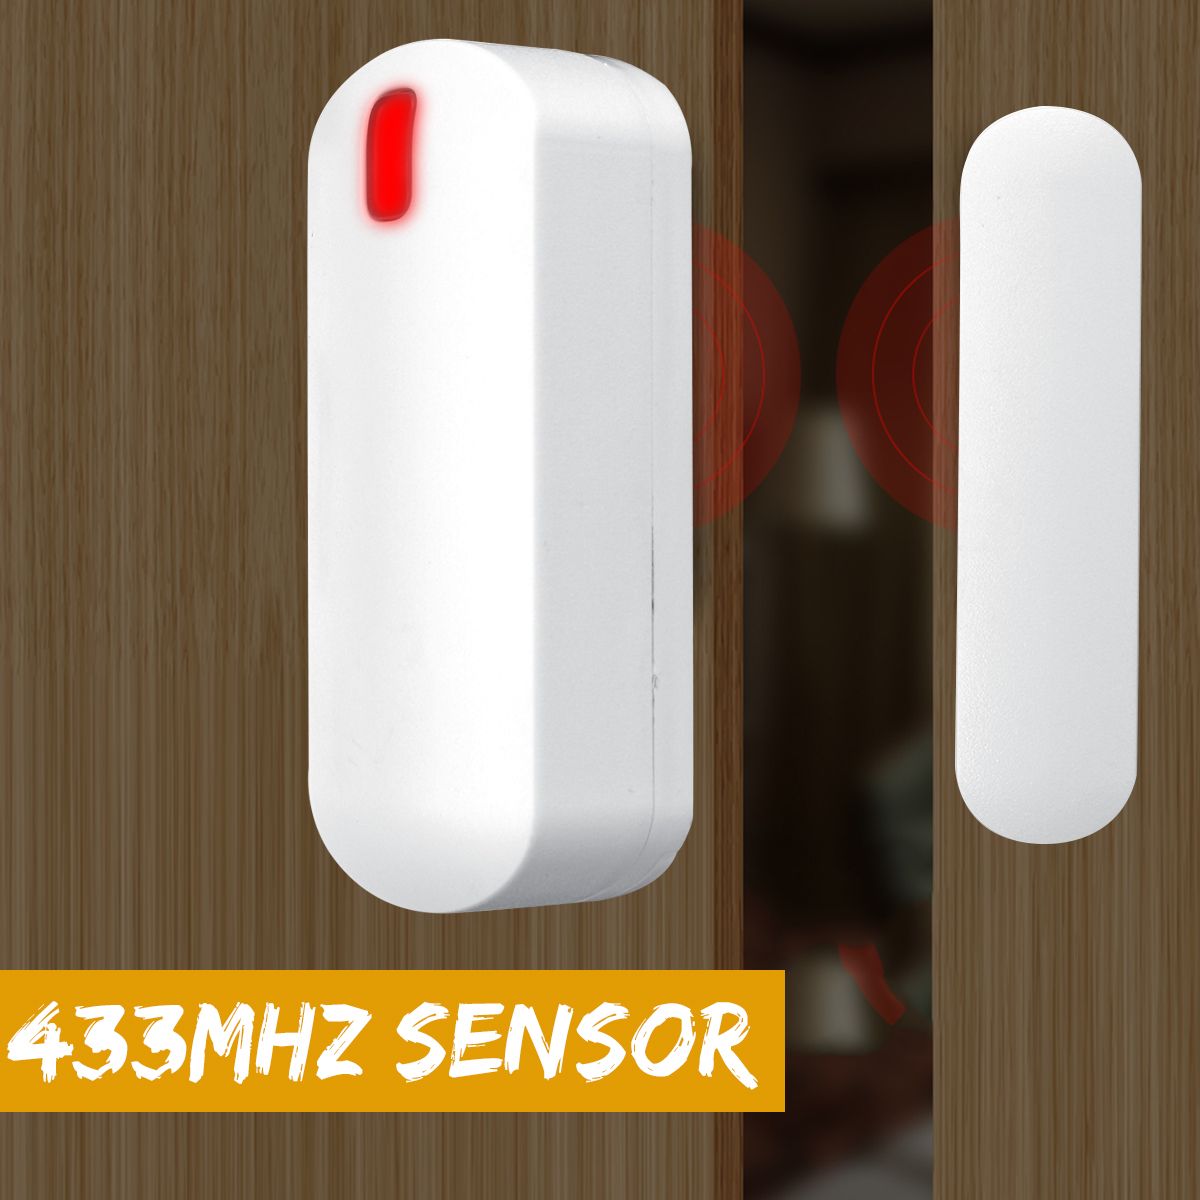 433MHz-Wireless-Security-Home-Door-Window-Entry-Alarm-System-Warning-Sensor-1431949